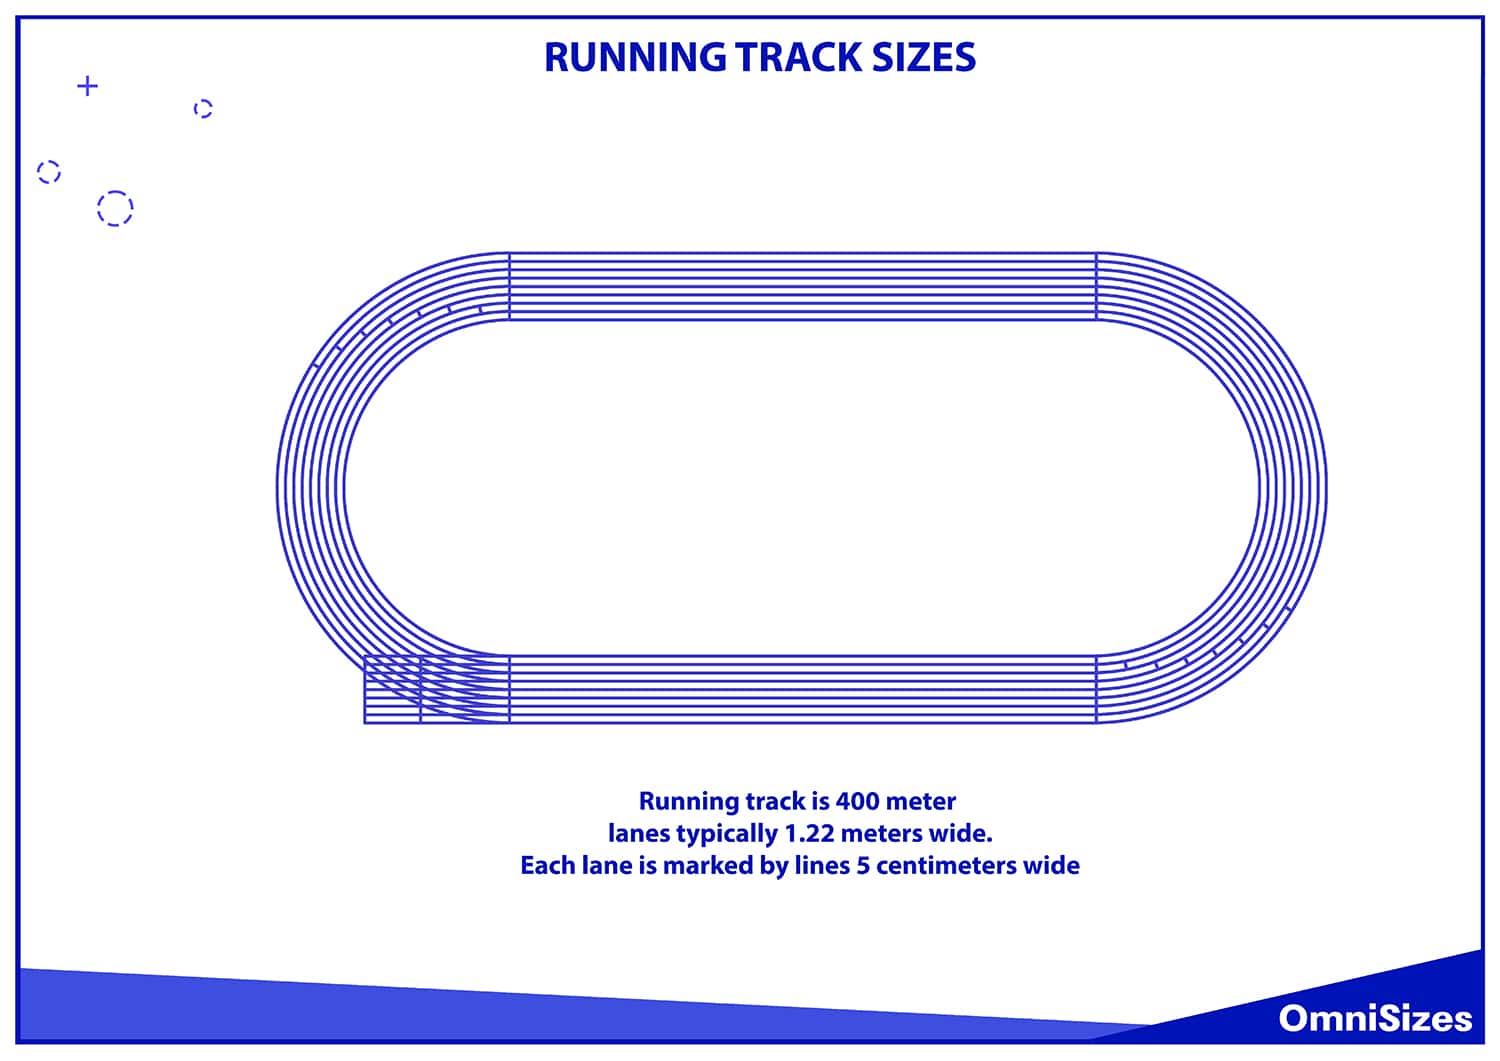 Running track sizes